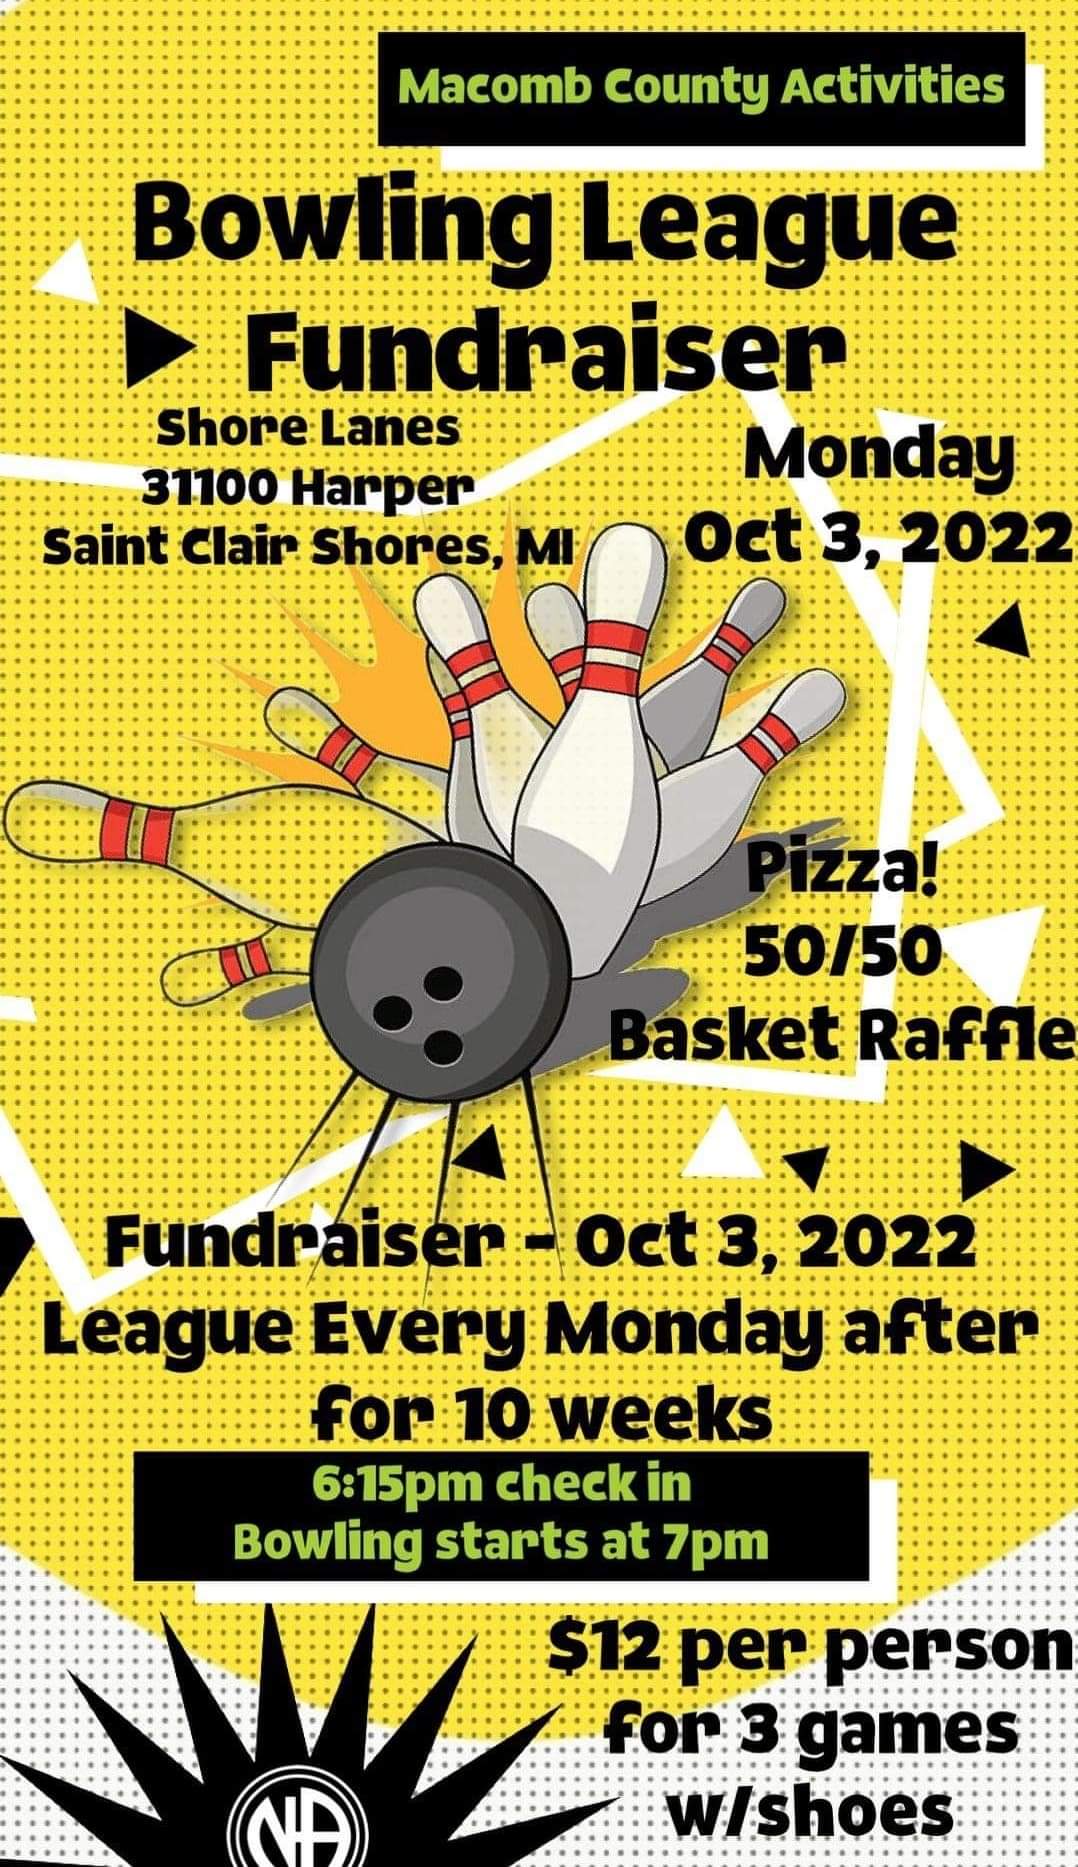 Bowling League Fundraiser @ Shore lanes | St. Clair Shores | Michigan | United States